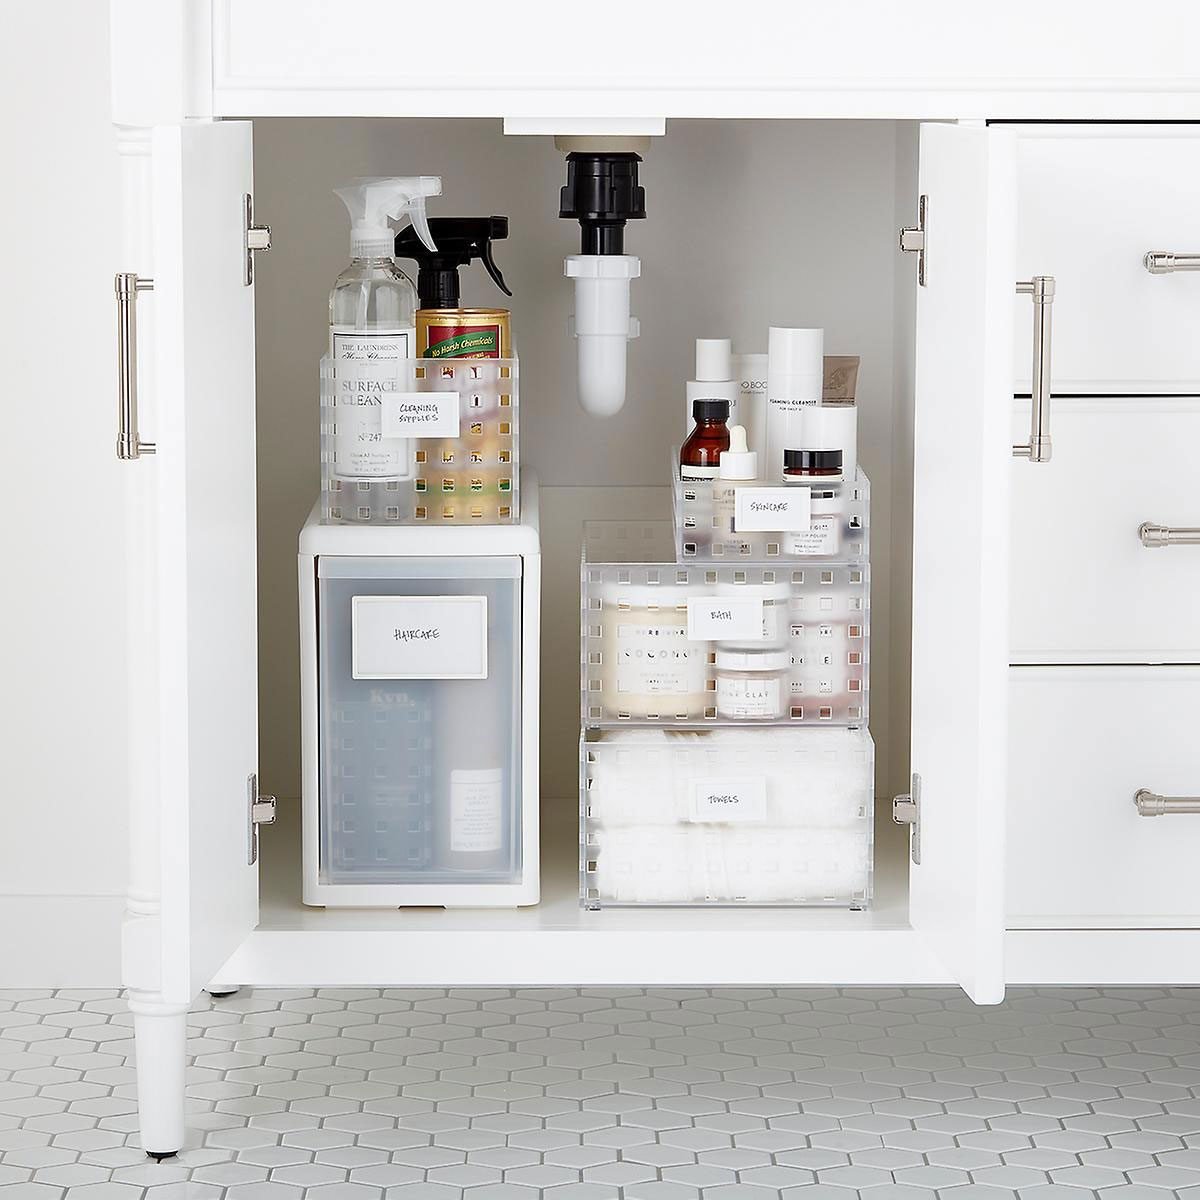 Bathroom Cabinet Organizers: 10 Ideas for Storage | Family Handyman